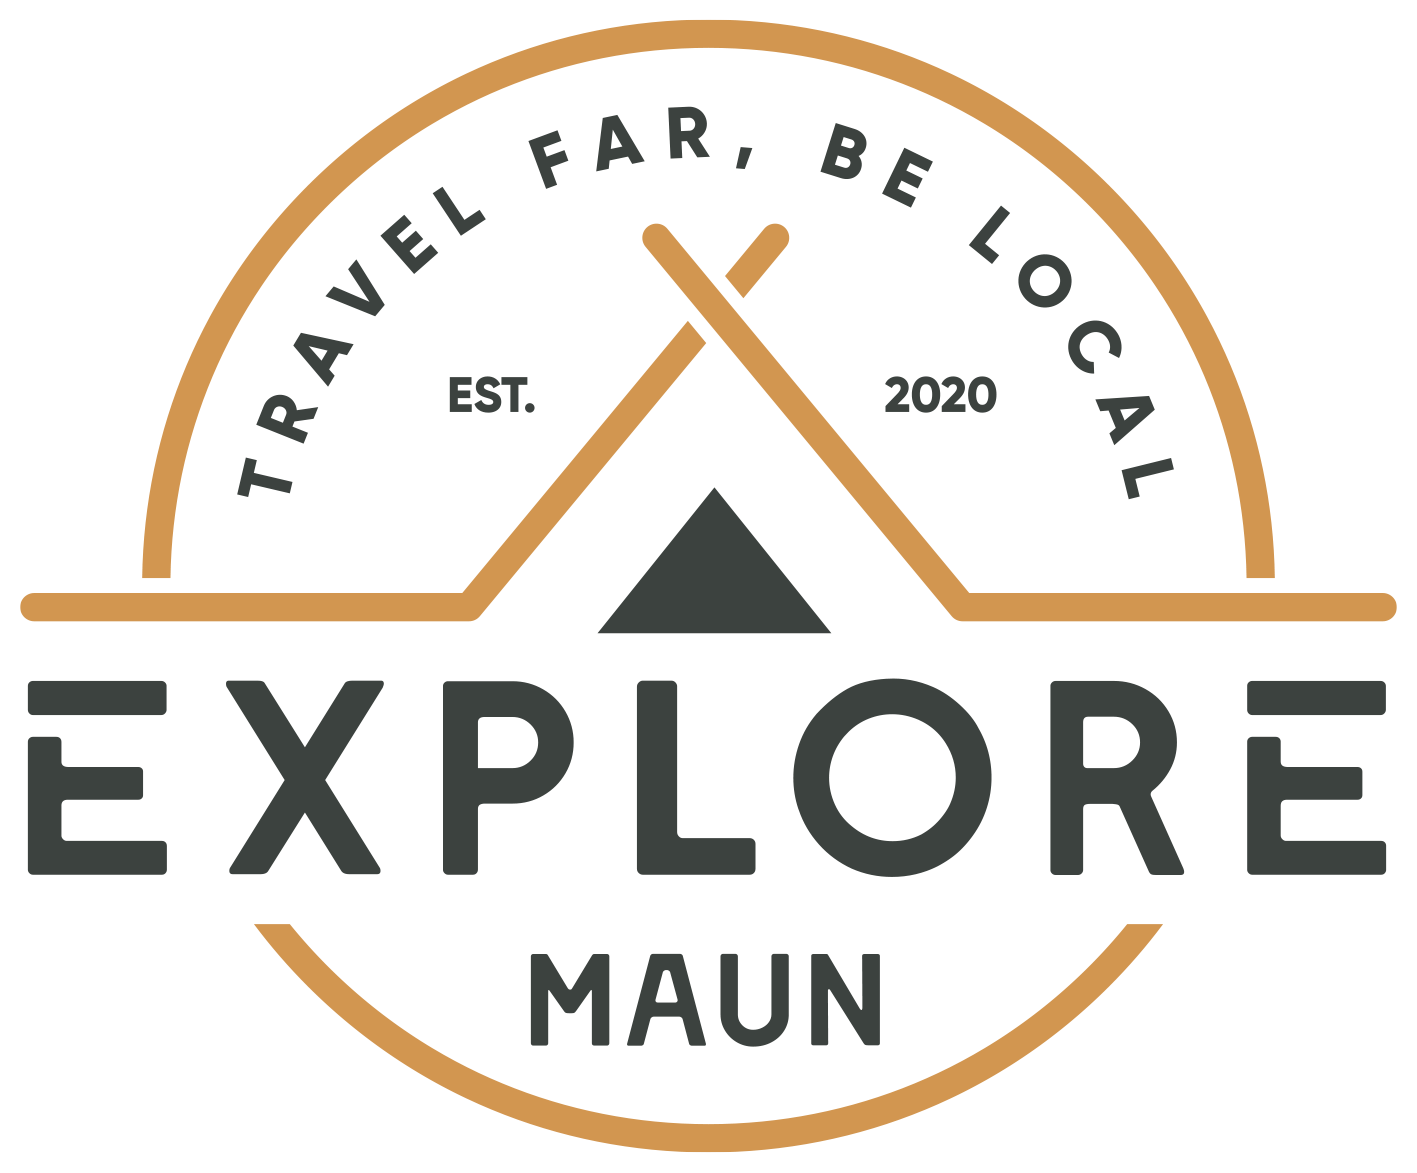 Explore Maun